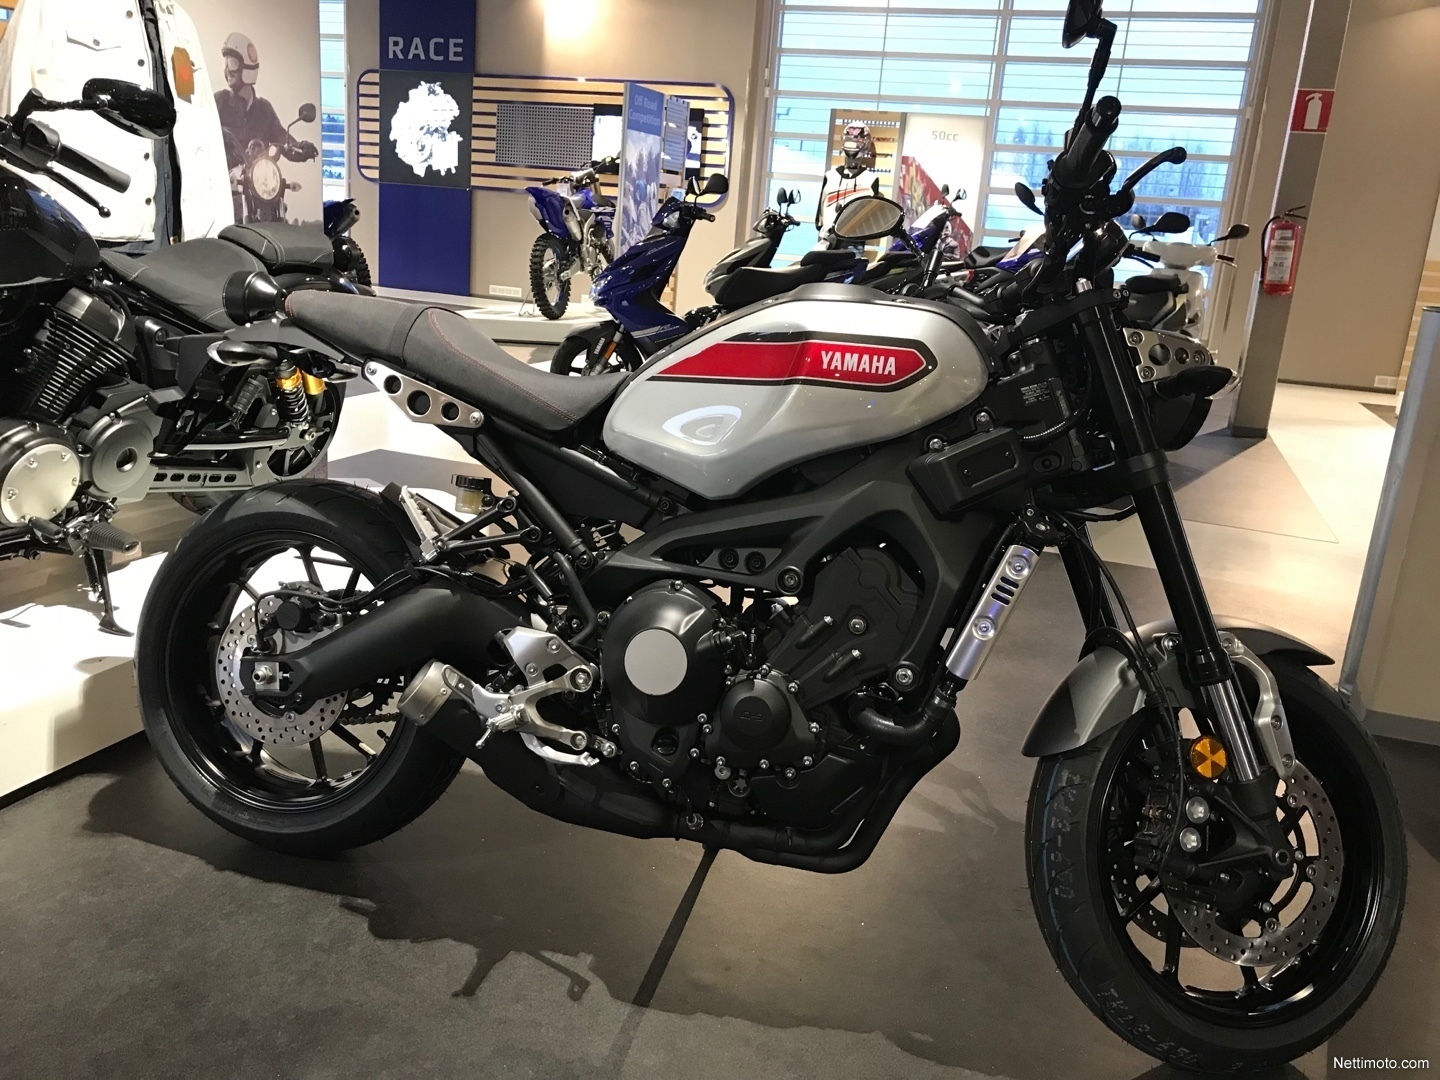 Yamaha XSR 900 900 cm³ 2019 - Vantaa - Motorcycle - Nettimoto